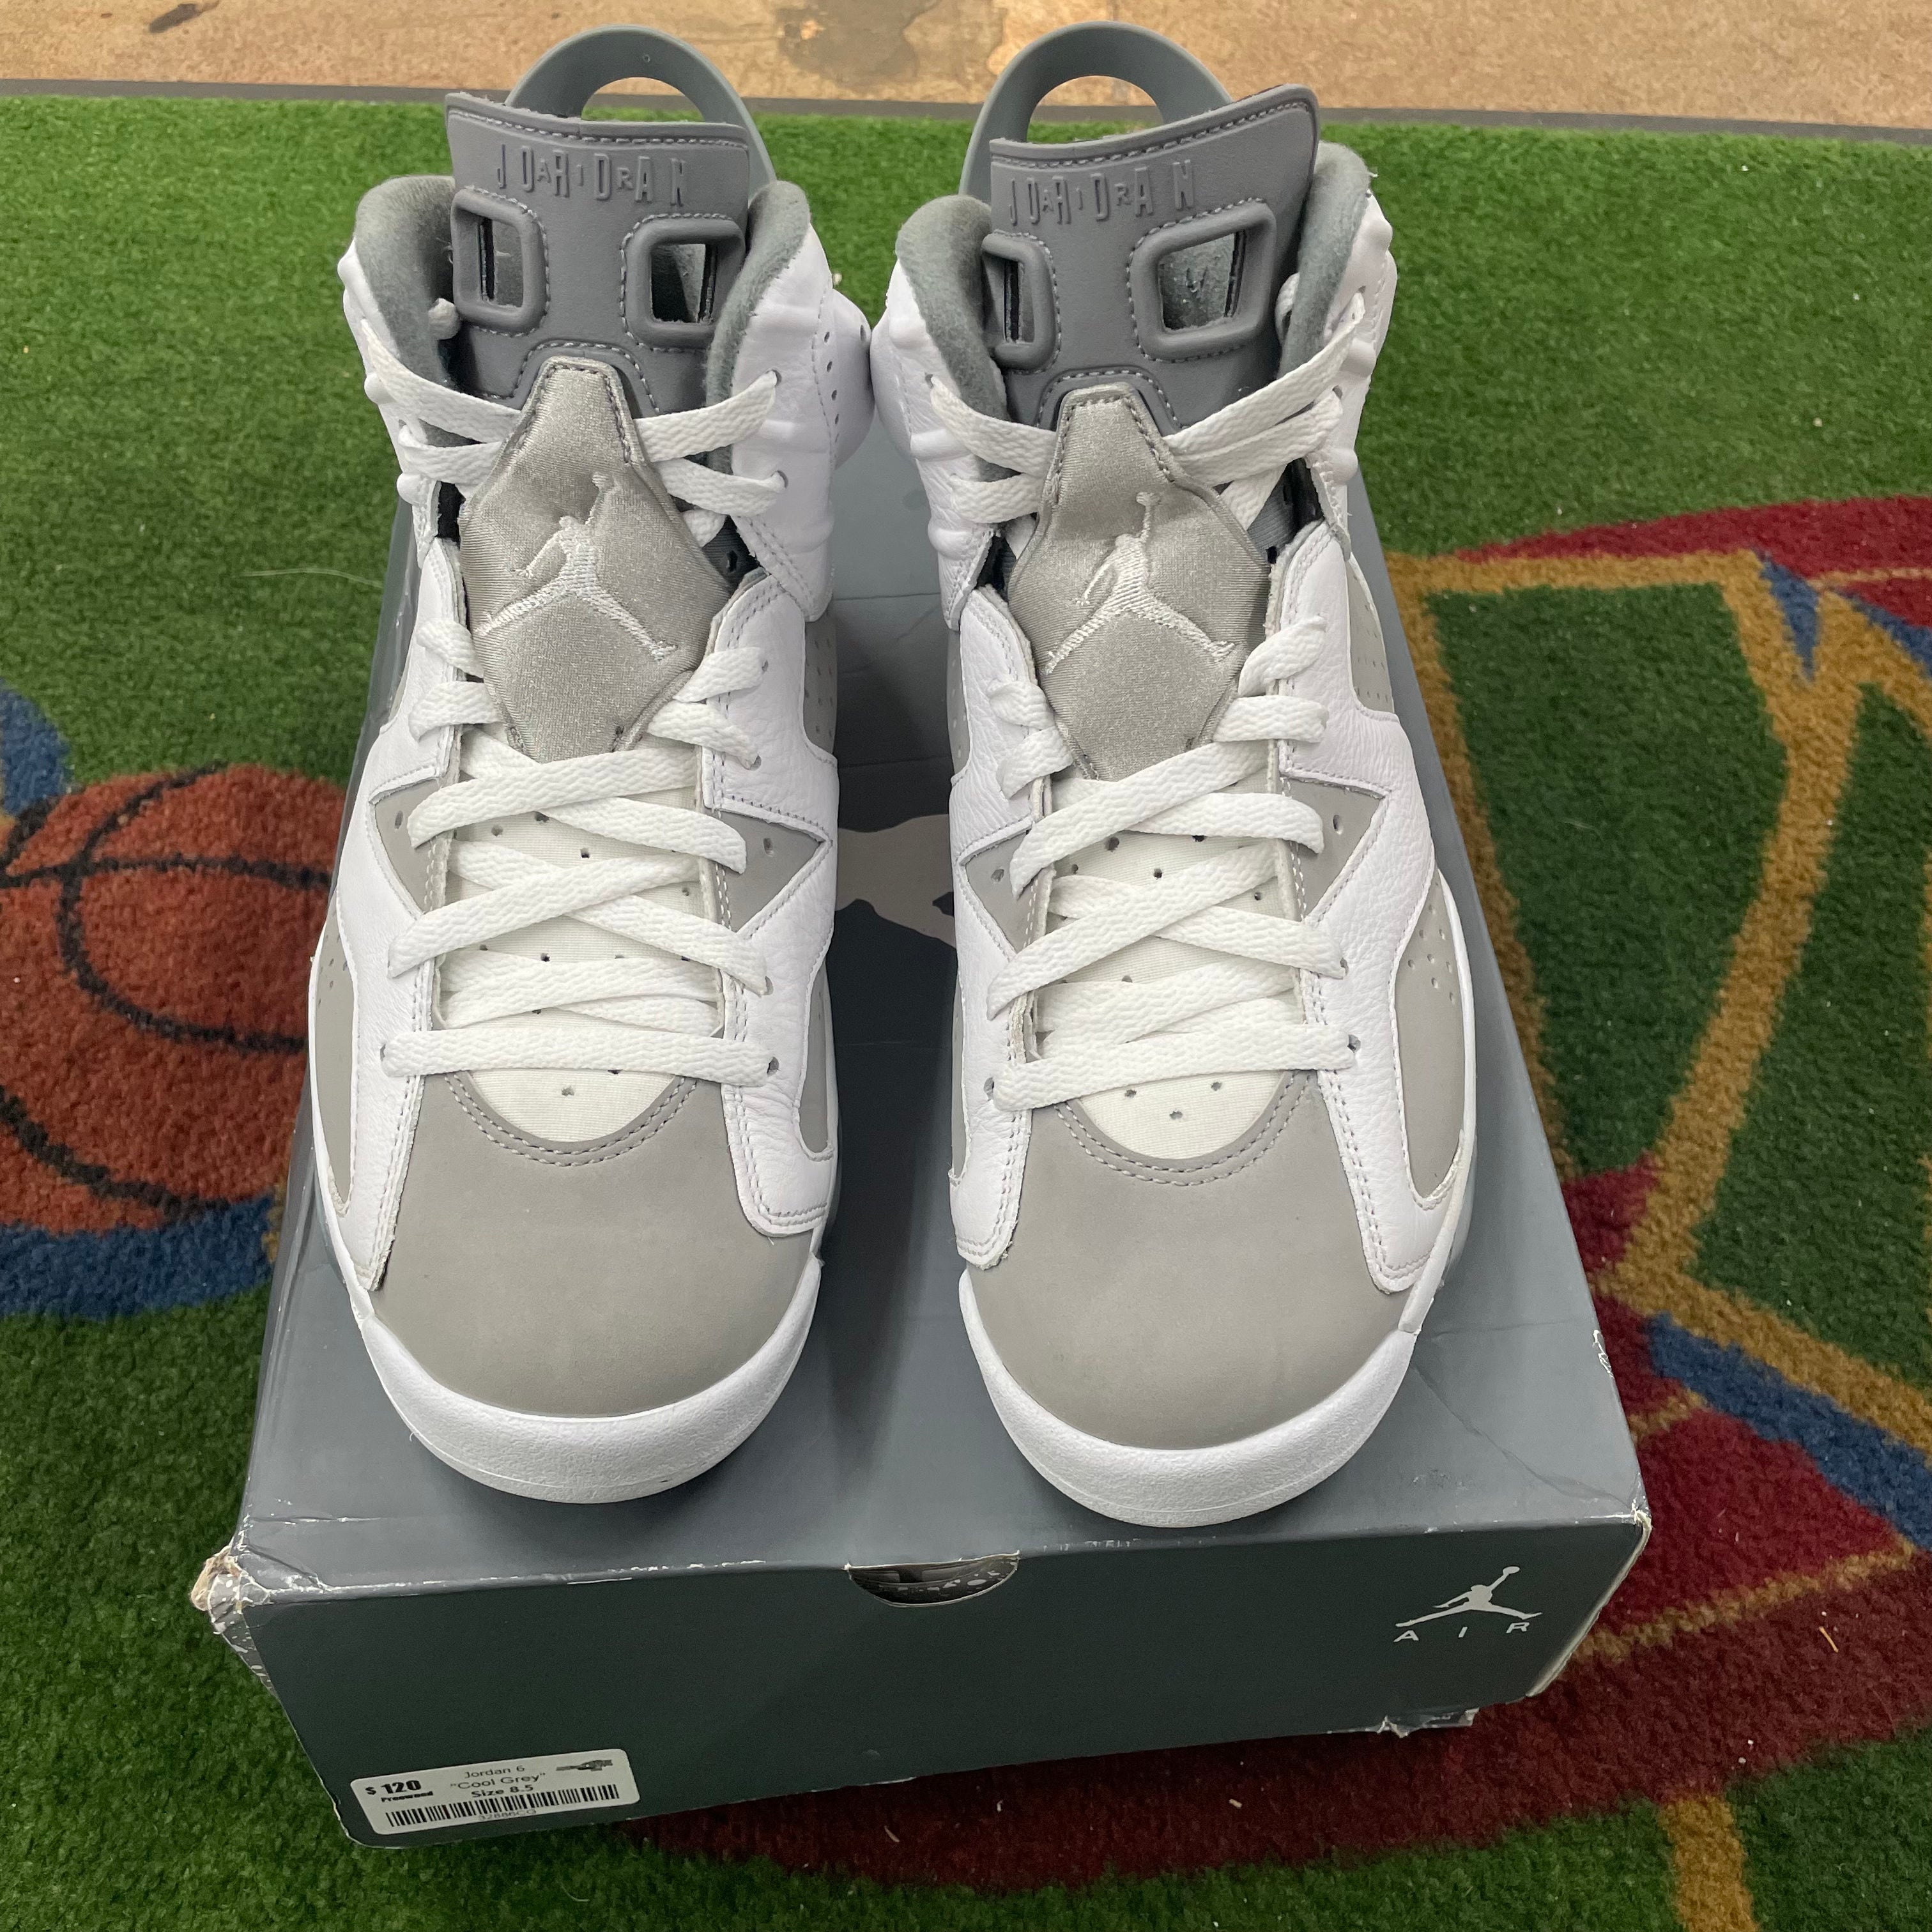 Jordan 6 “Cool Grey” Size 8.5